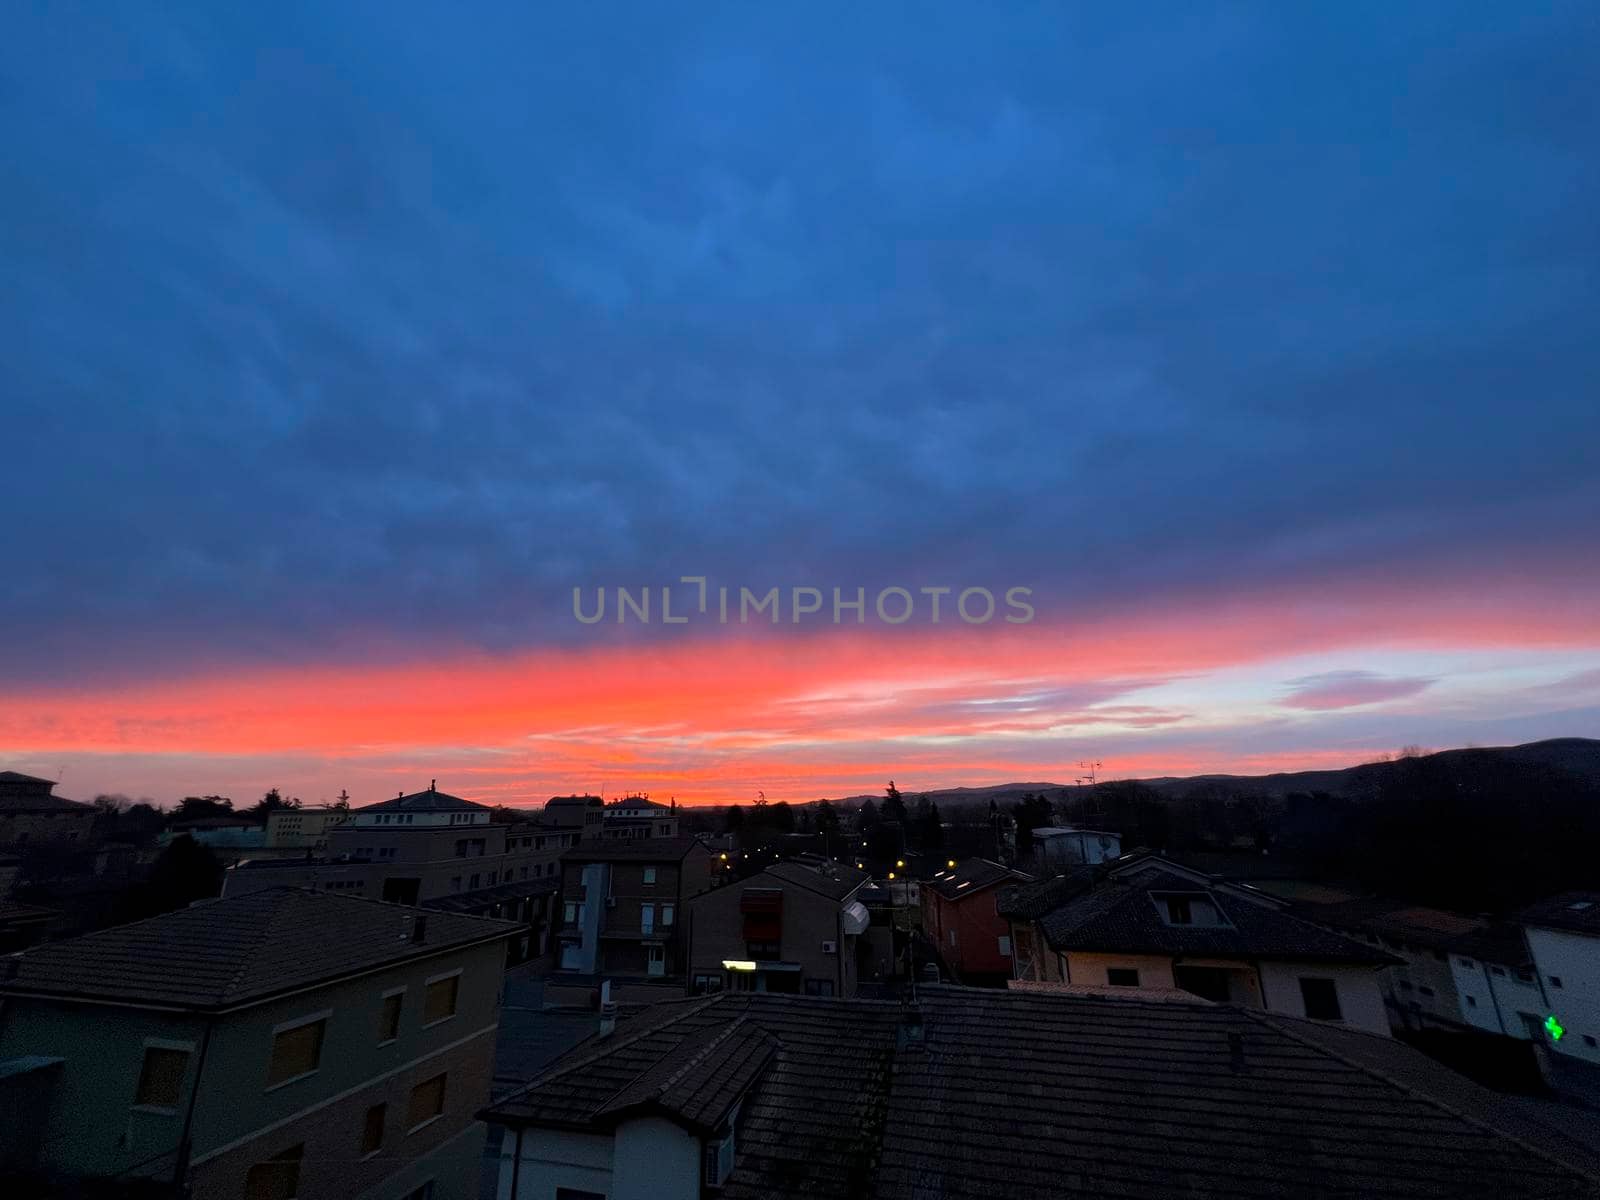 bibbiano reggio emilia beautiful panoramic sunrise over the town by tinofotografie